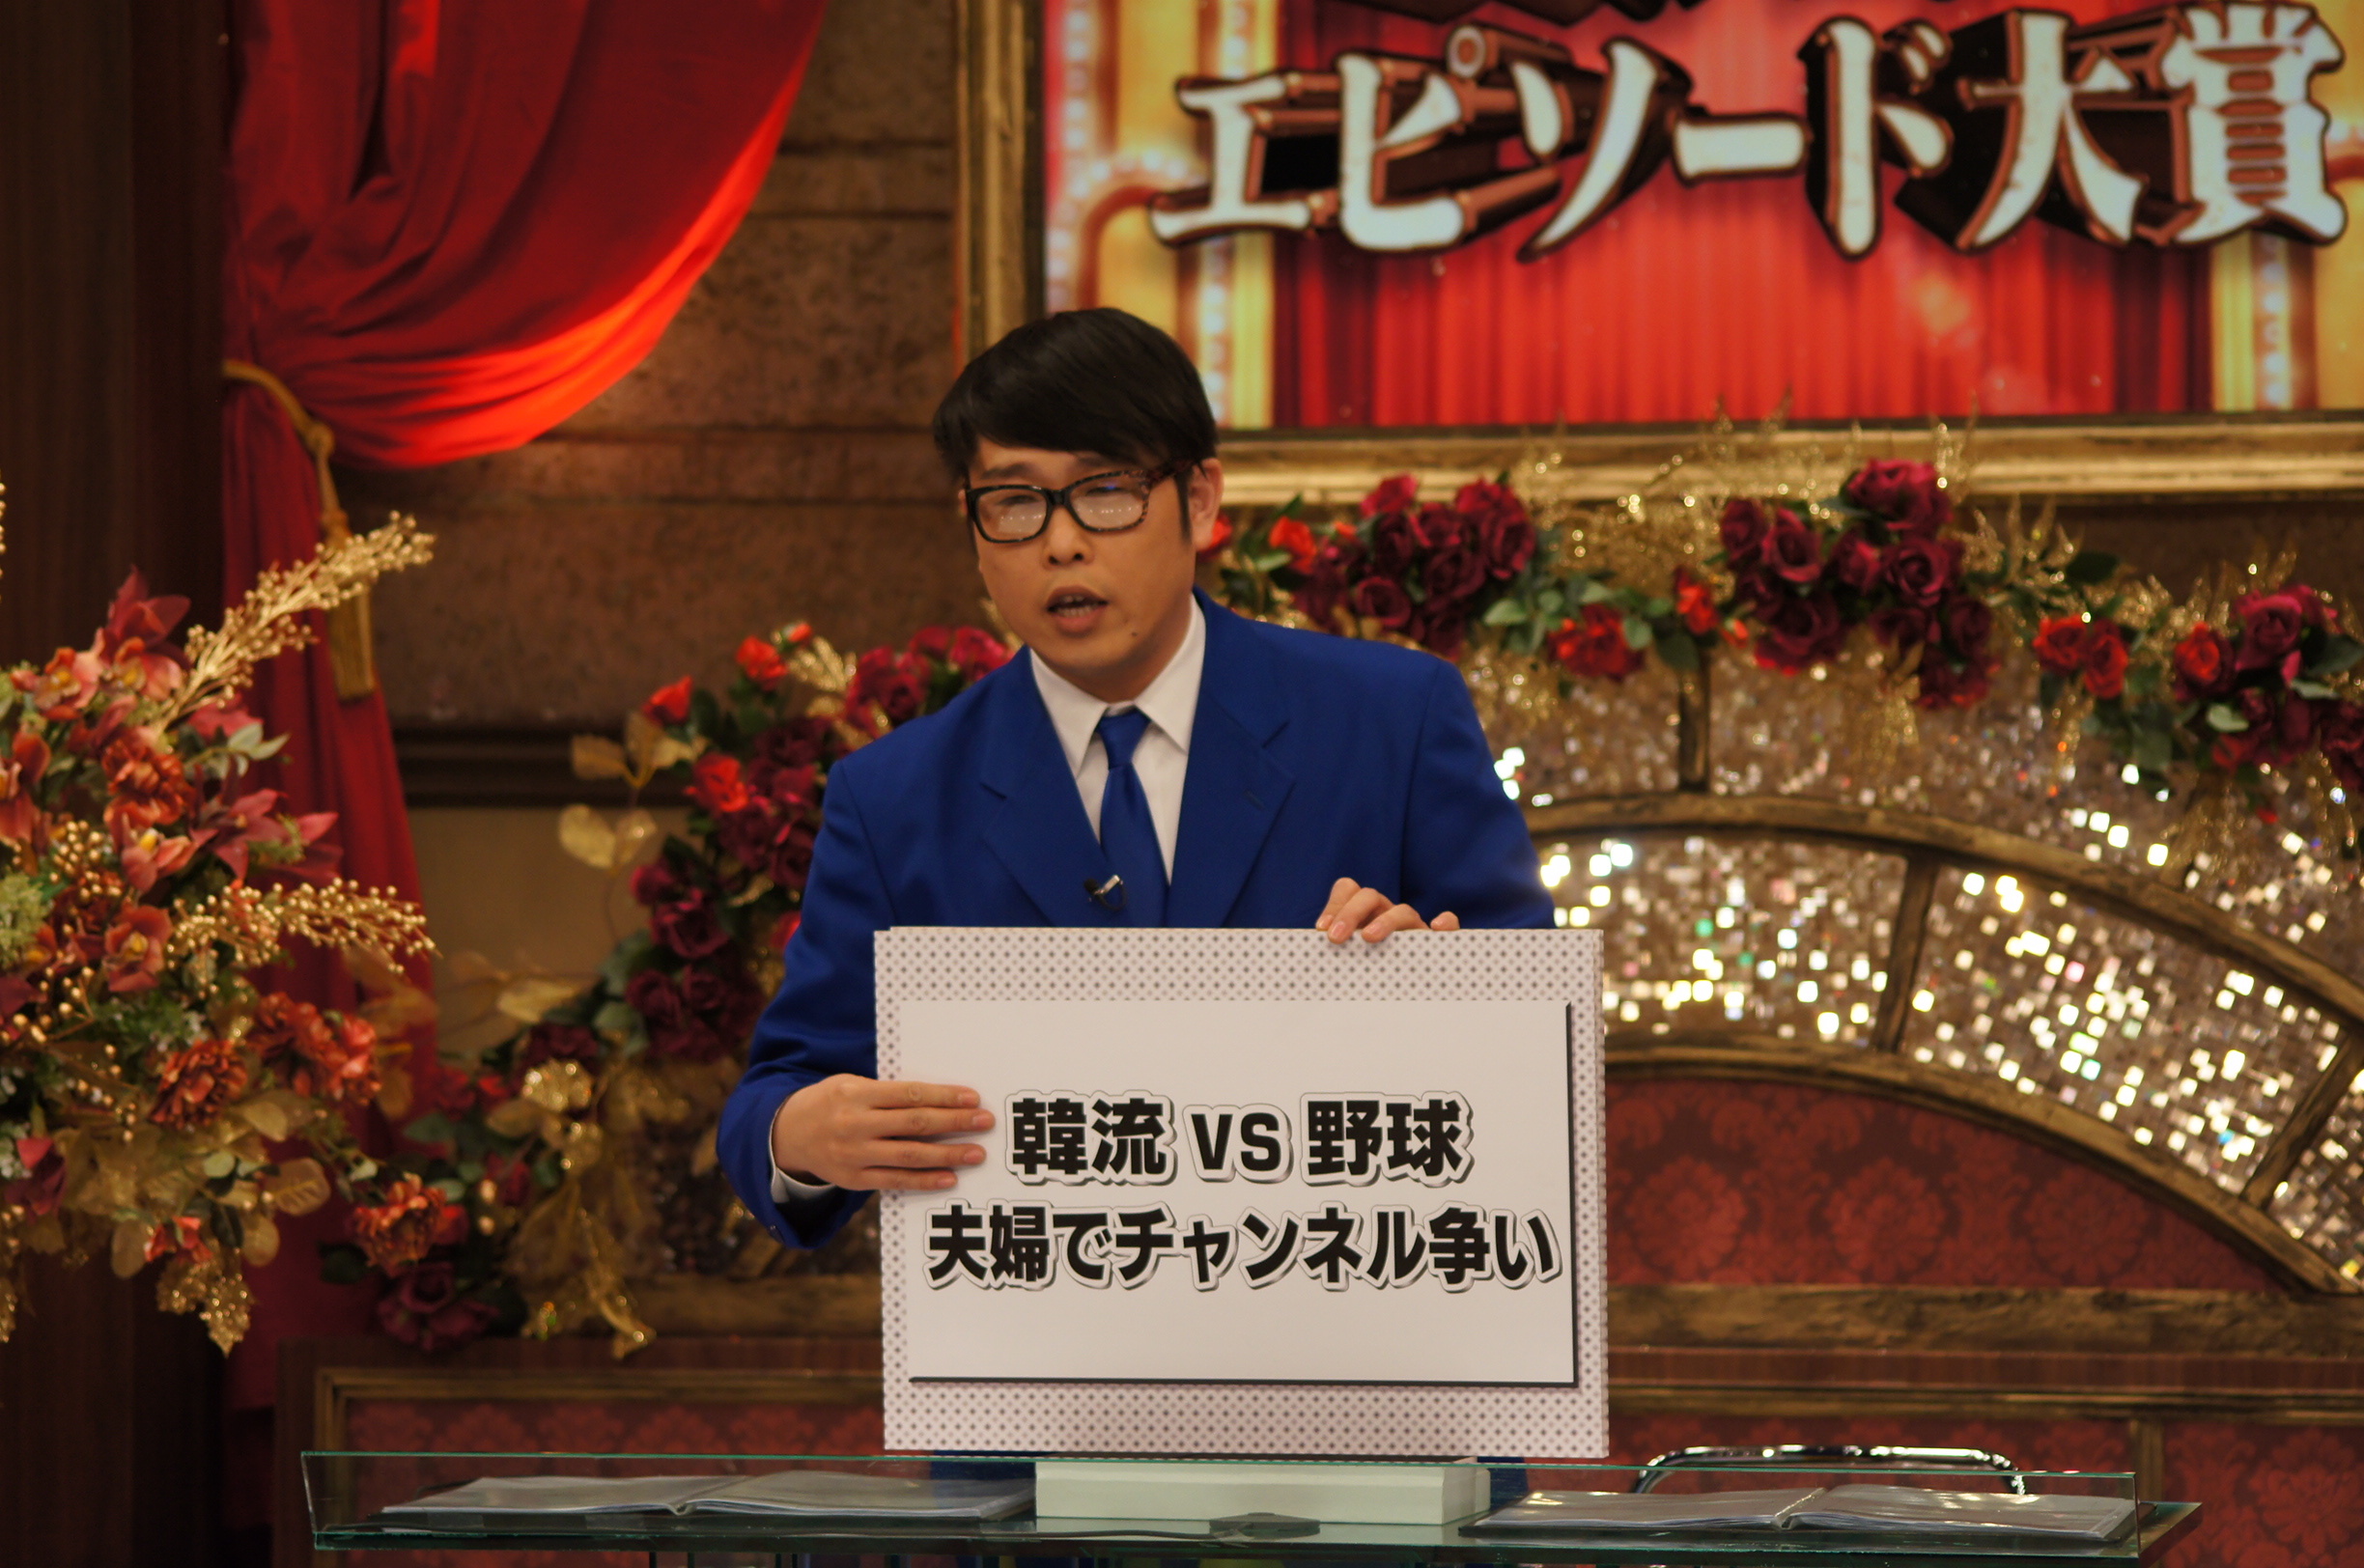 http://news.yoshimoto.co.jp/photos/uncategorized/2014/12/18/20141218033049-c4d9fbfc7da31c3062a06ebd743909c784d470e3.jpg